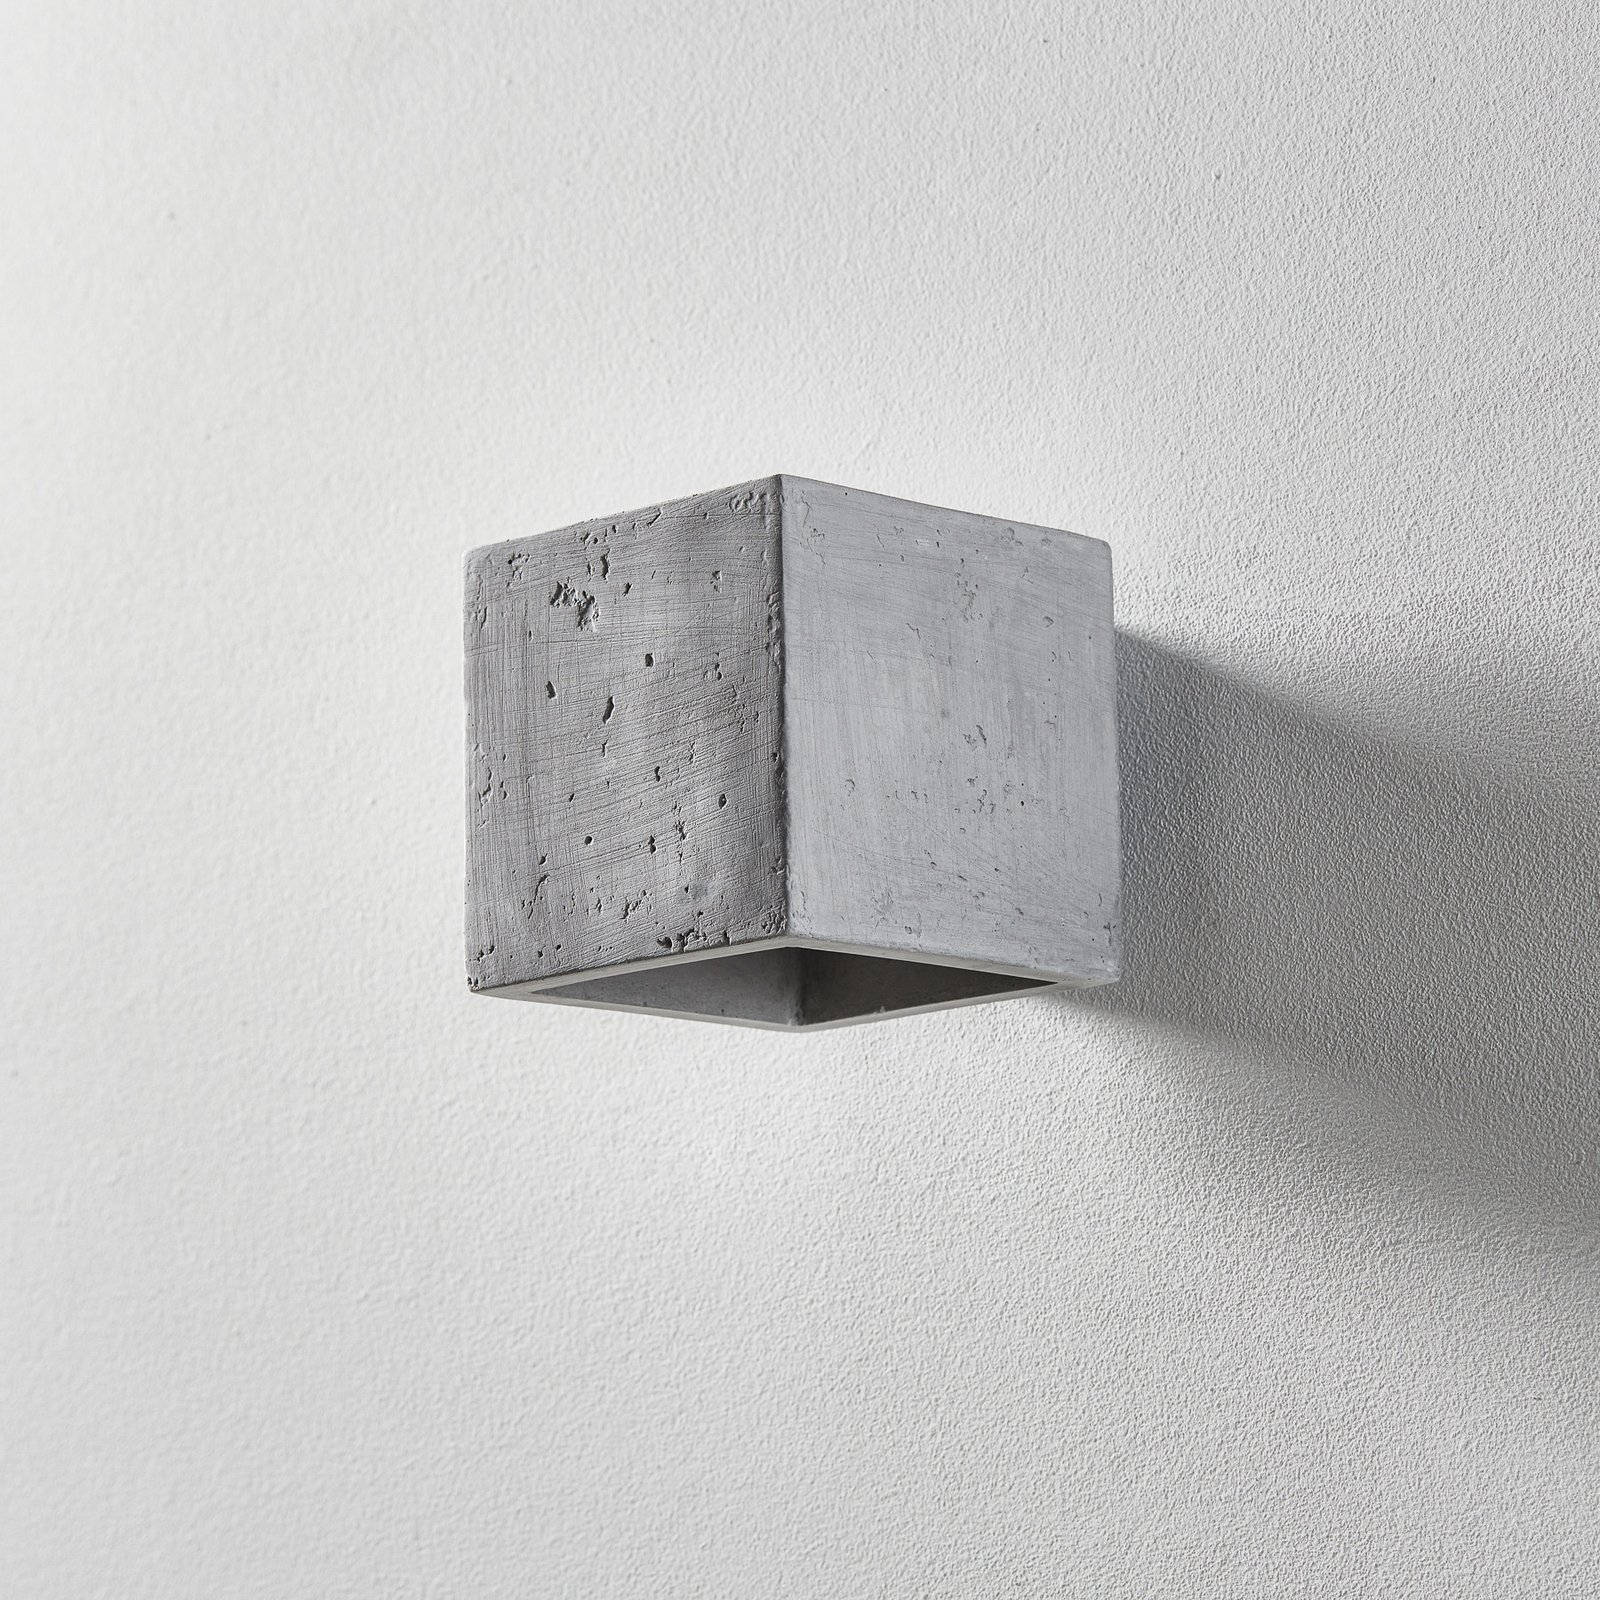 Ara wall light as a concrete cube